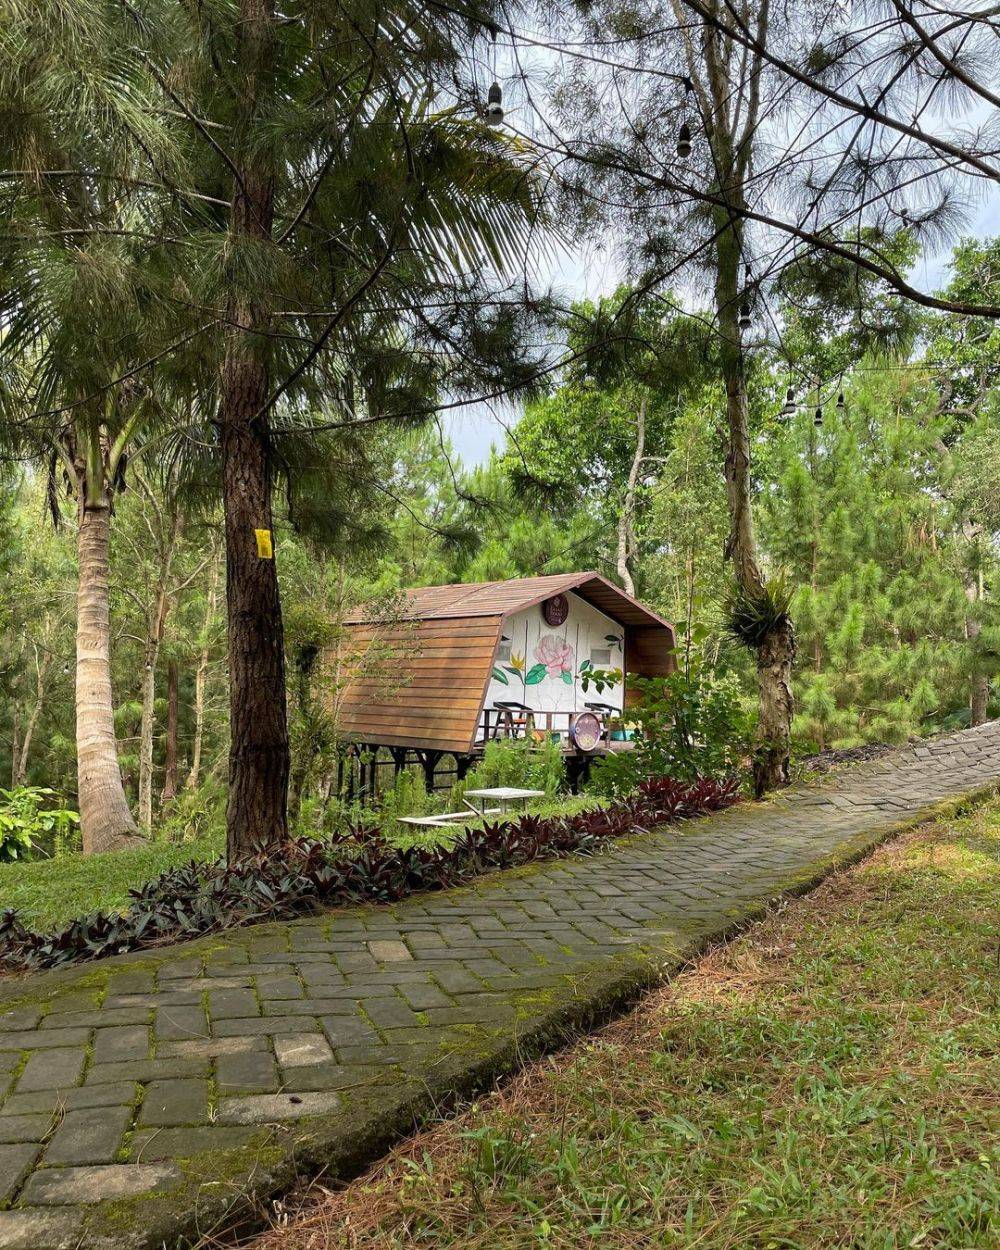 6 Rekomendasi Wisata Glamping Yogyakarta untuk Healing dan Melepas Penat 2